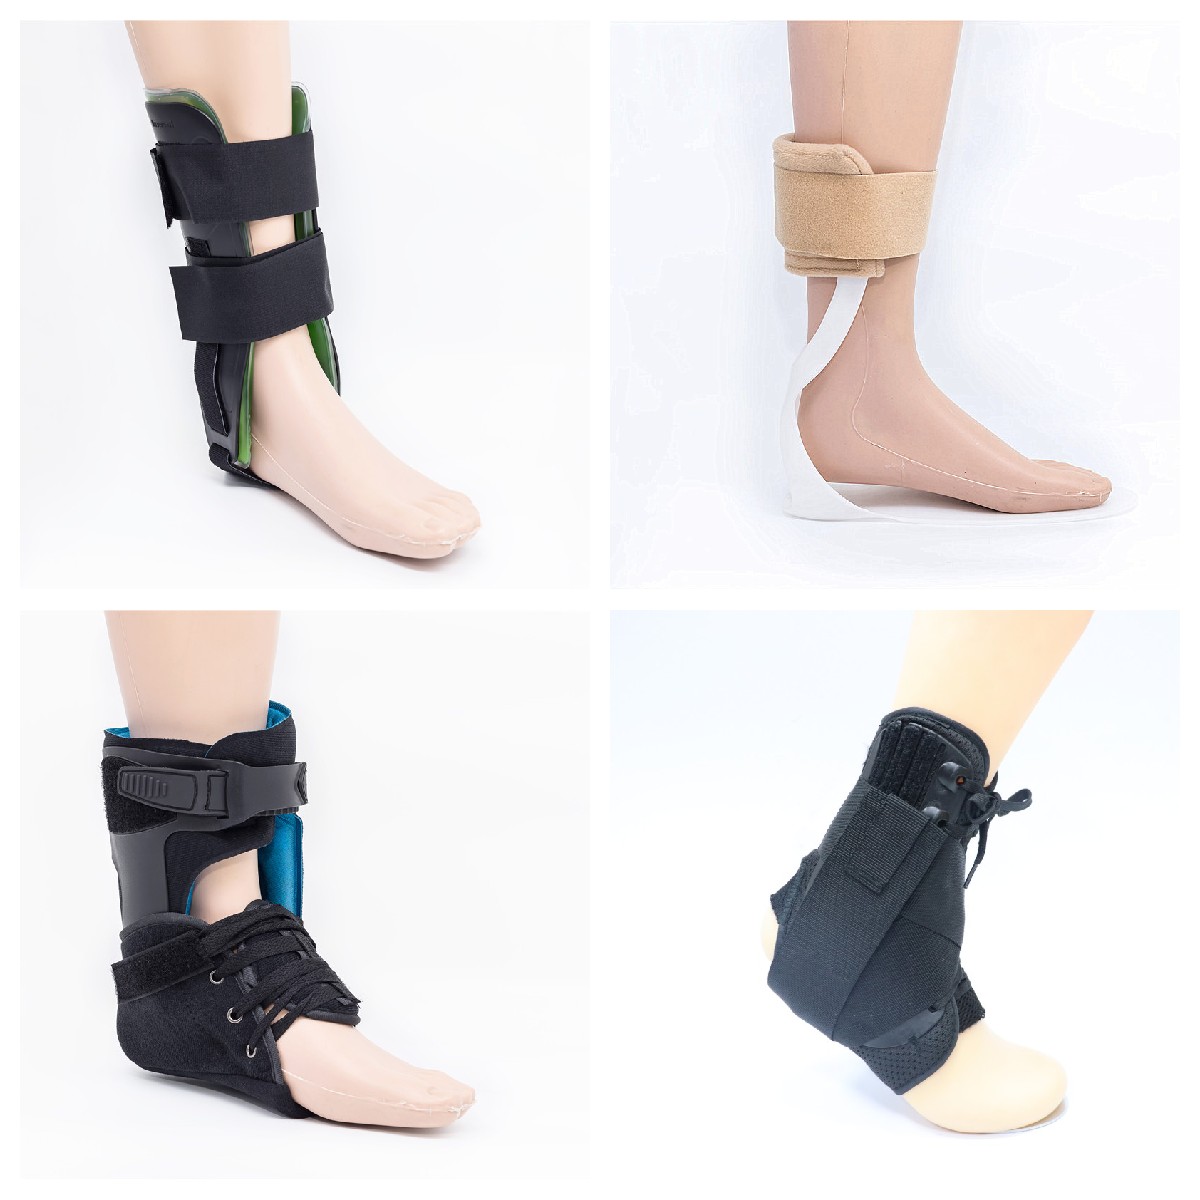 ankle foot orthosis